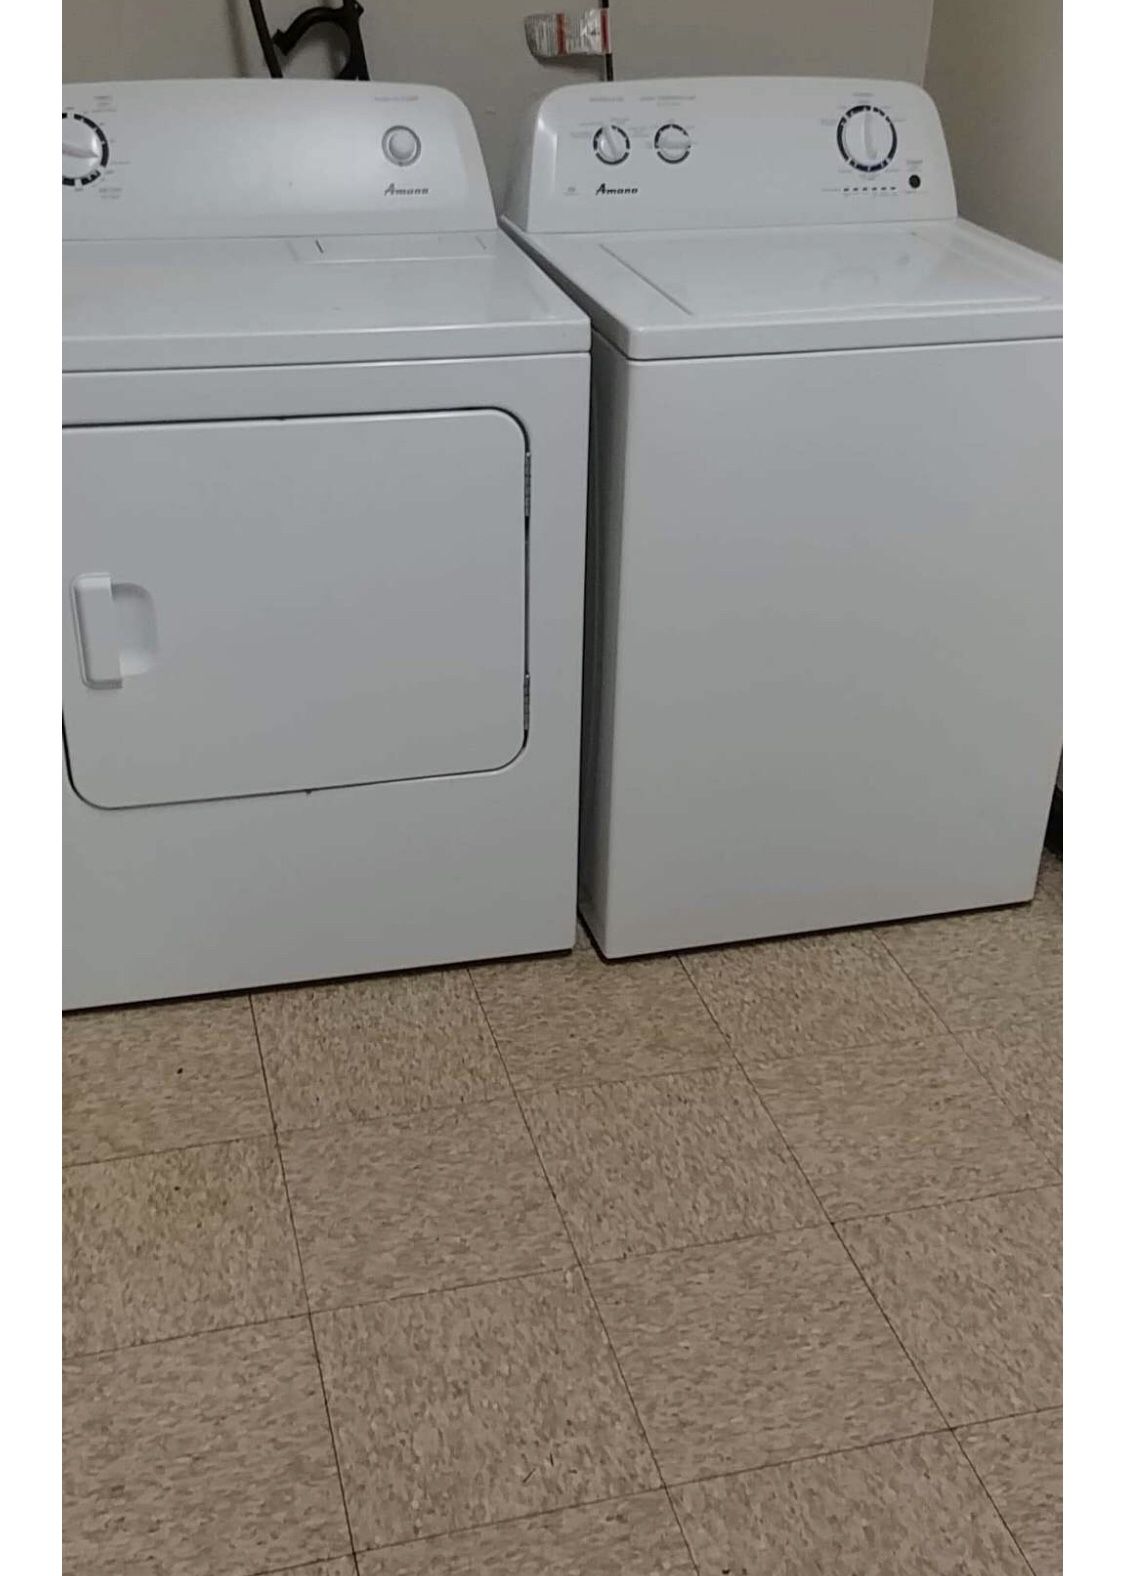 Amana washer and dryer set